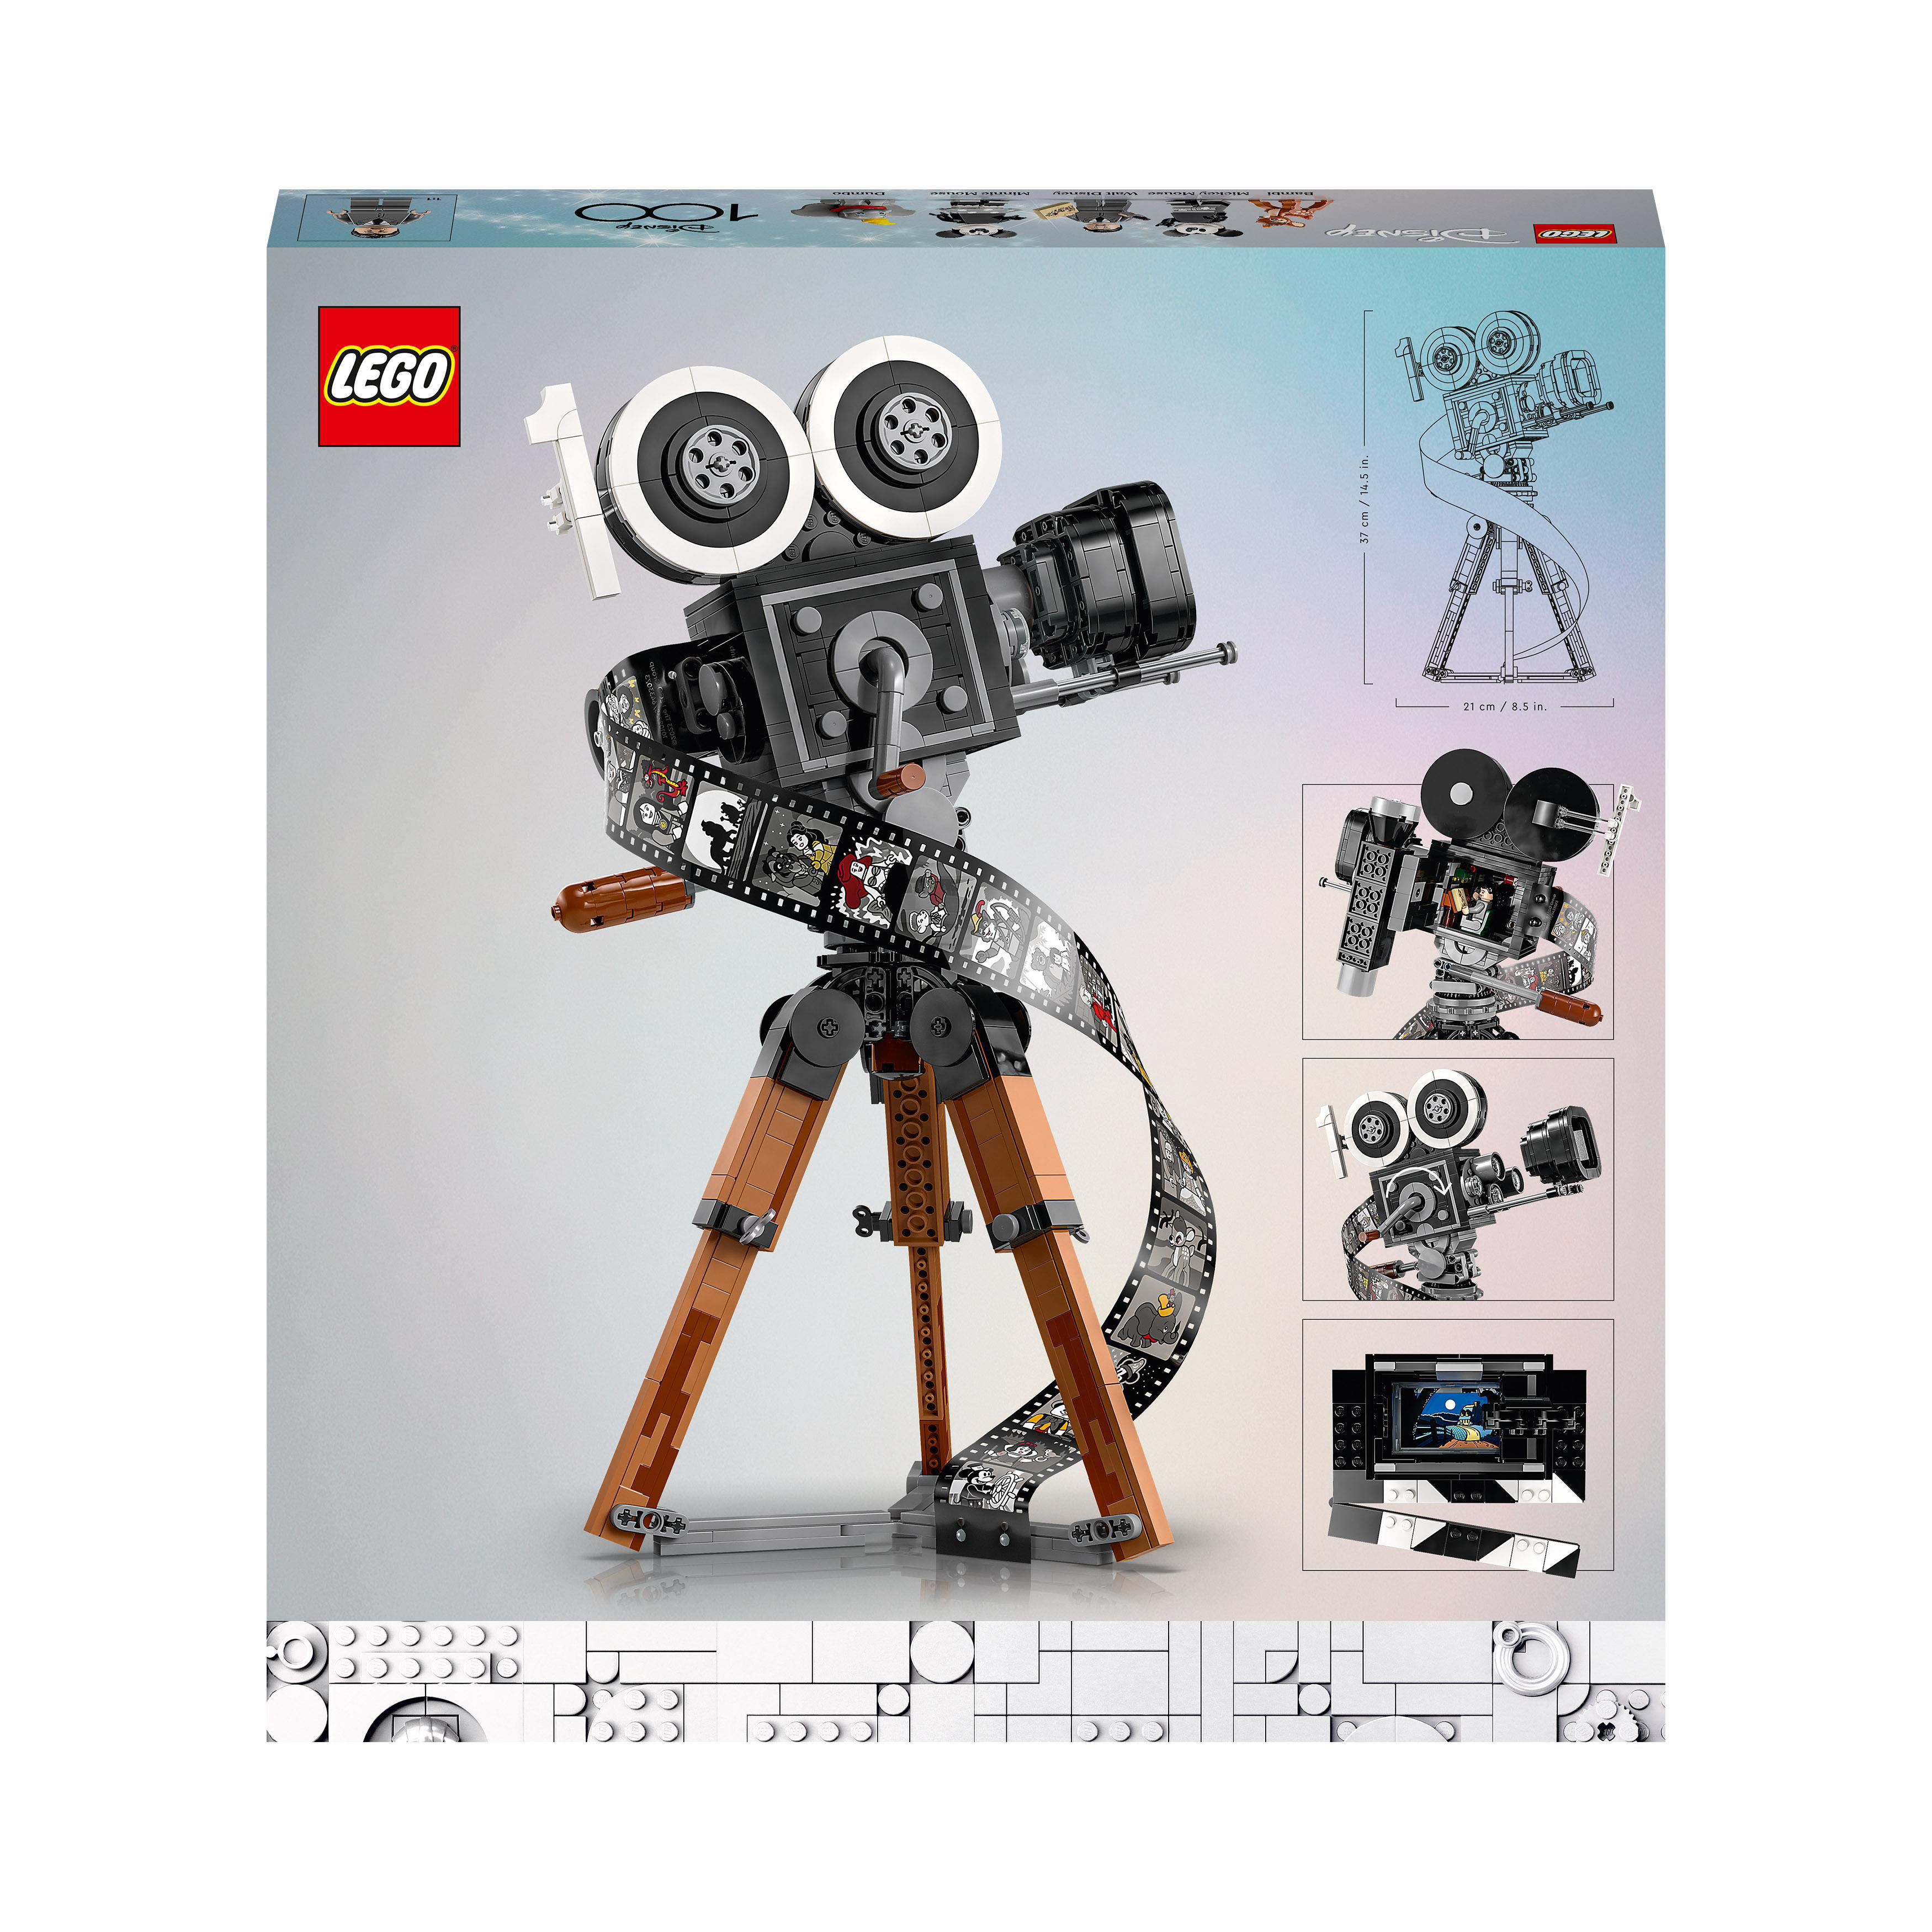 LEGO Disney Hommage Walt 43230 Bausatz, Disney Kamera an – Mehrfarbig